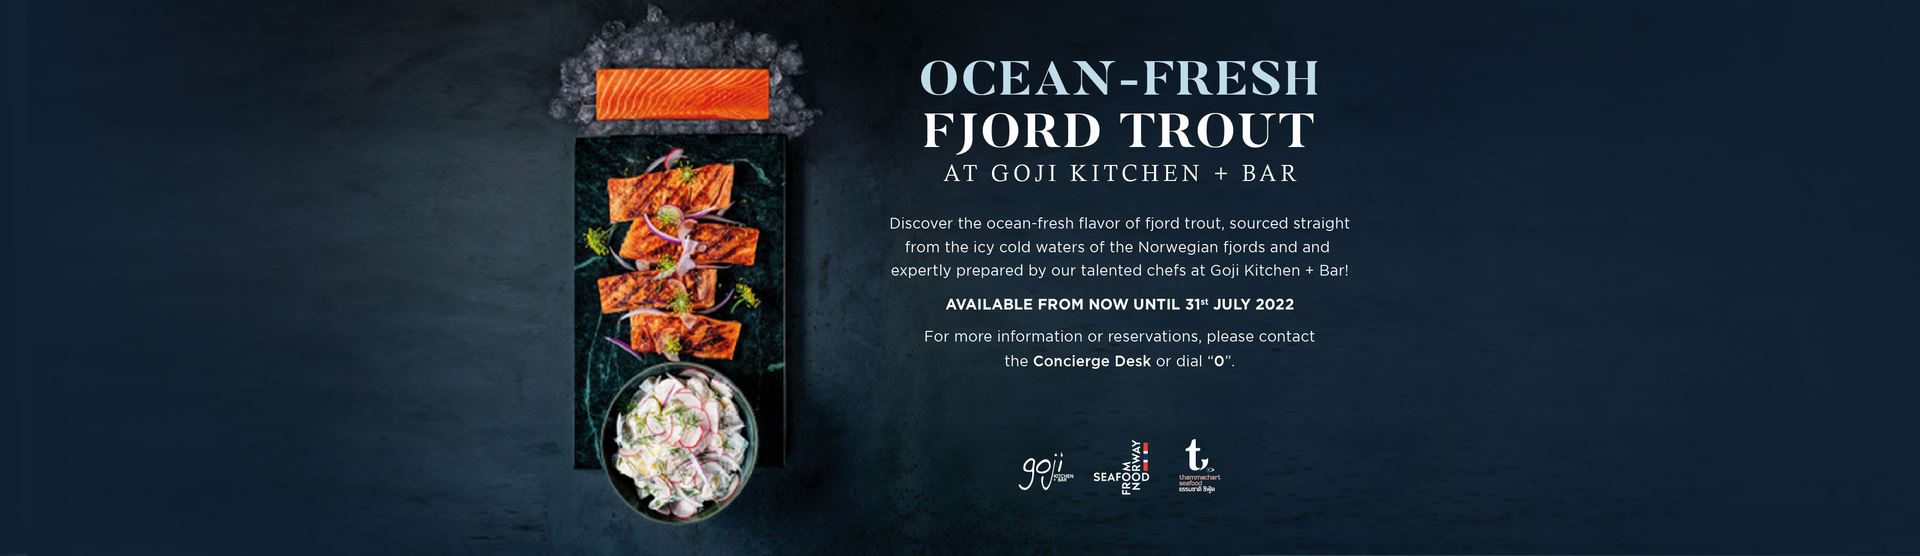 Savour the Ocean-Fresh Flavour of Fjord Trout at Goji Kitchen + Bar